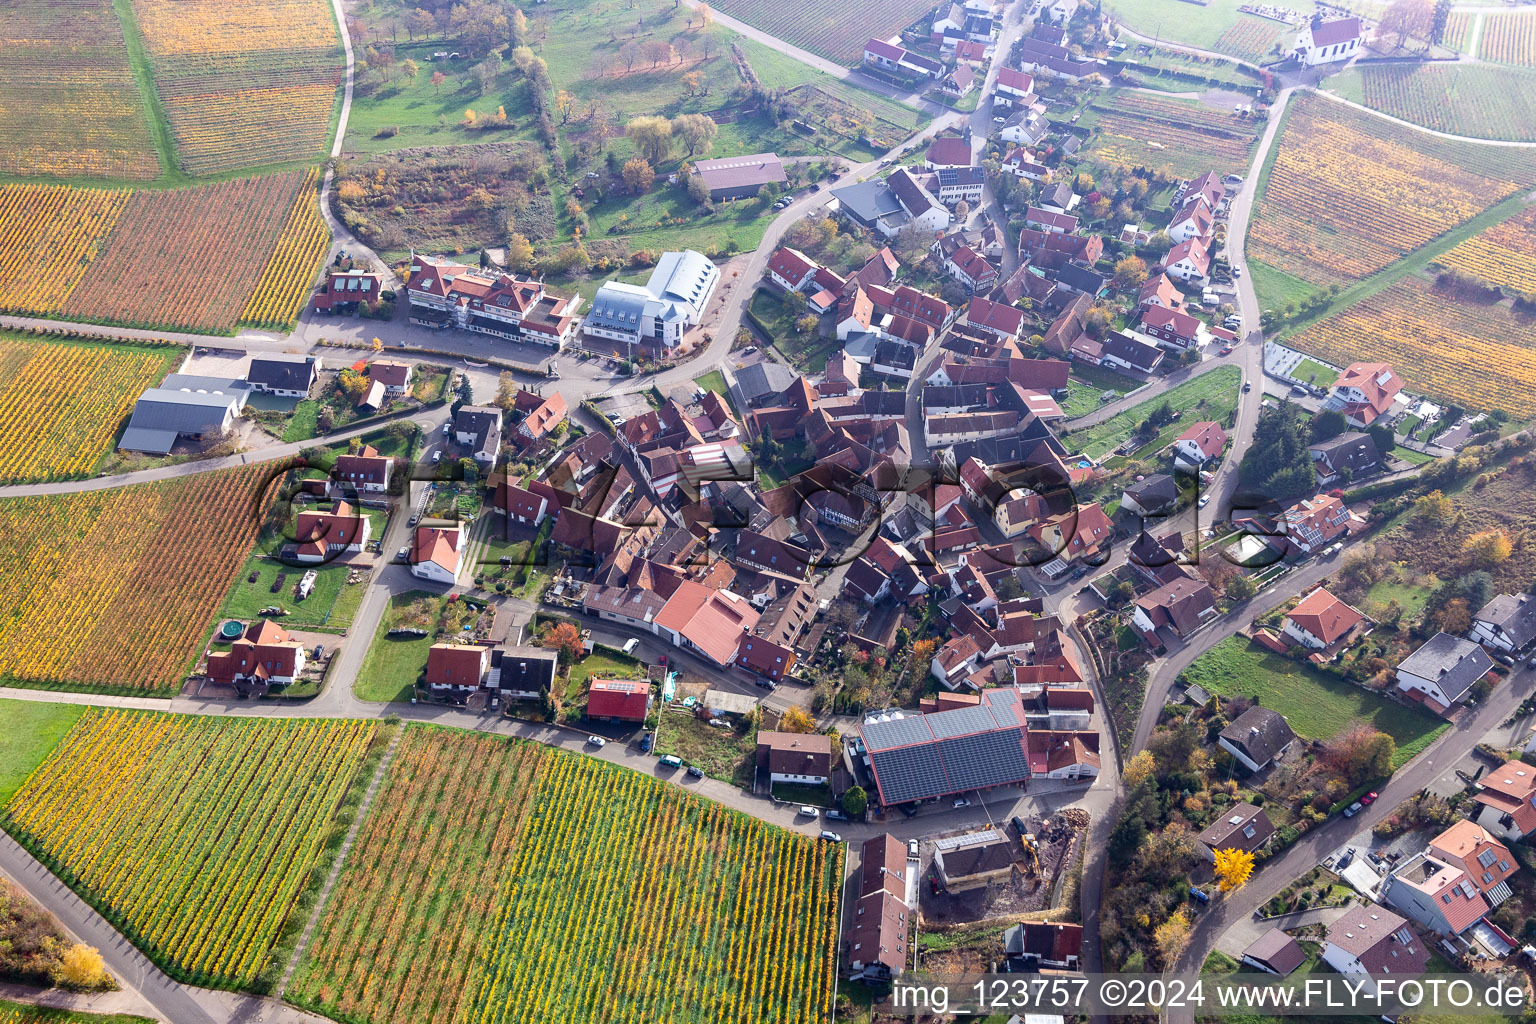 Drone image of District Gleiszellen in Gleiszellen-Gleishorbach in the state Rhineland-Palatinate, Germany